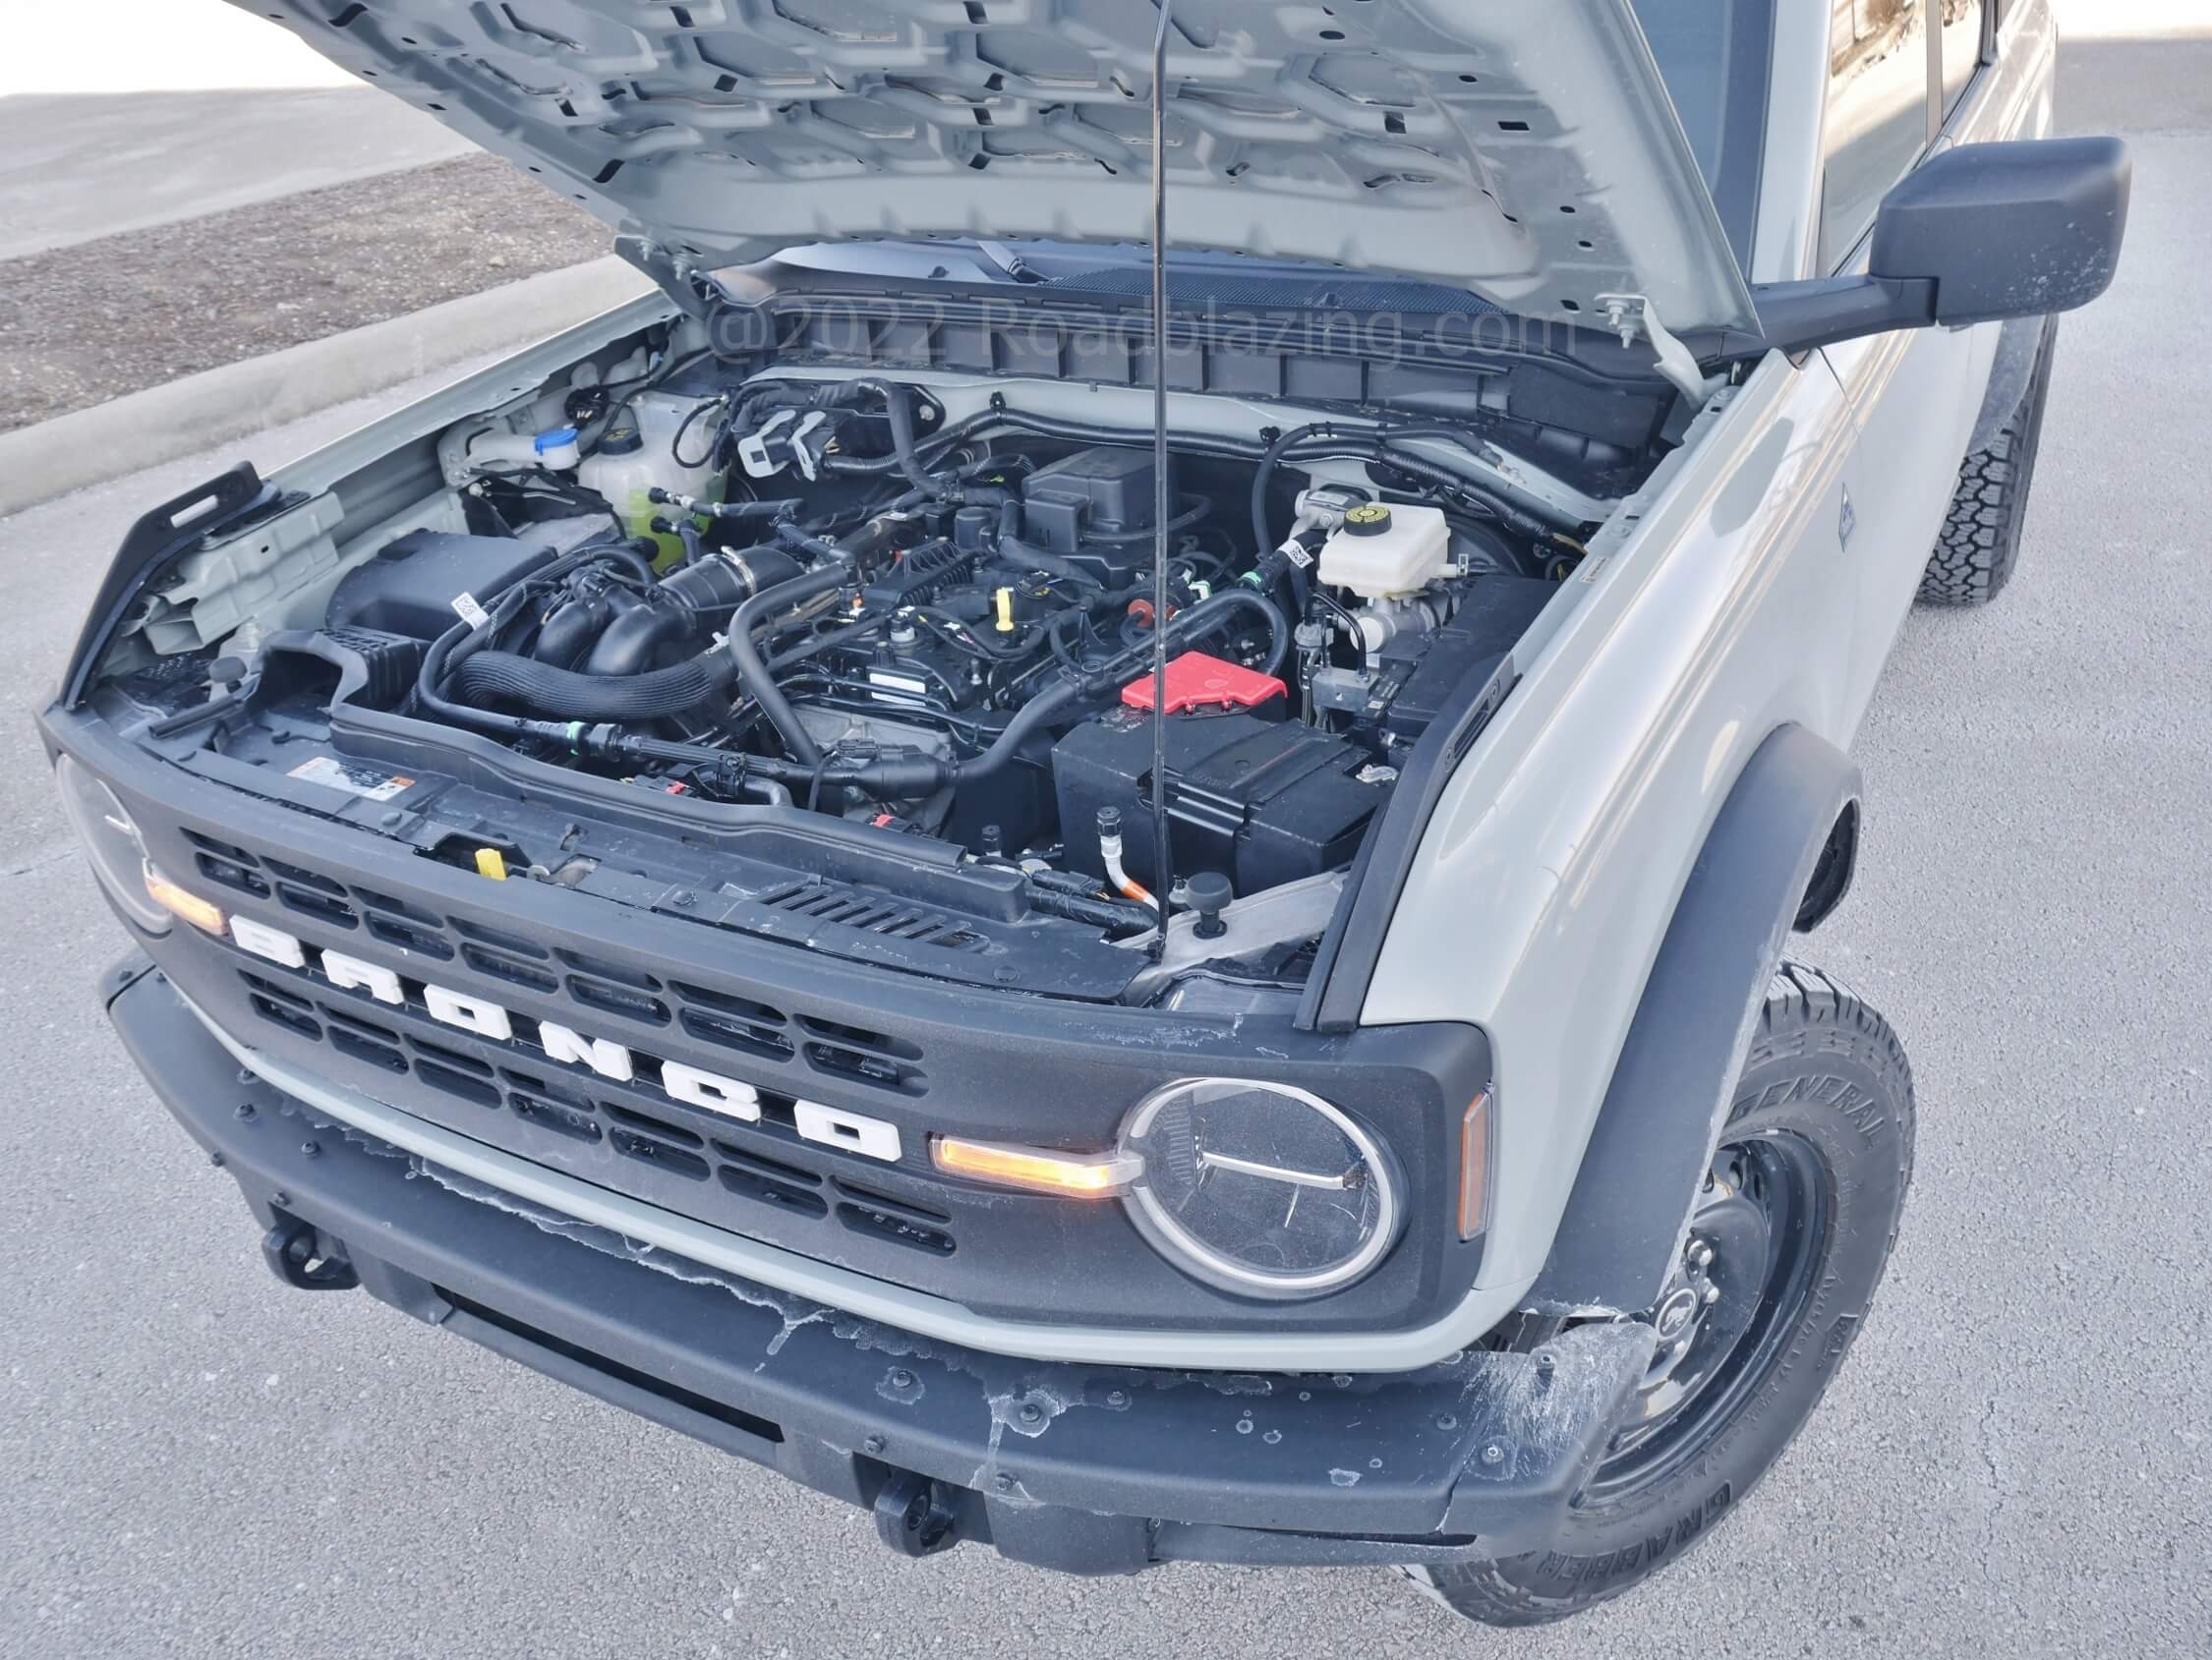 2021 Ford Bronco 4-Door Black Diamond 4x4 2.3T: 270 hp on regular / 300 hp on premium unleaded fuel + 7 speed manual gearbox + AdvancTrak electronic two speed 4WD